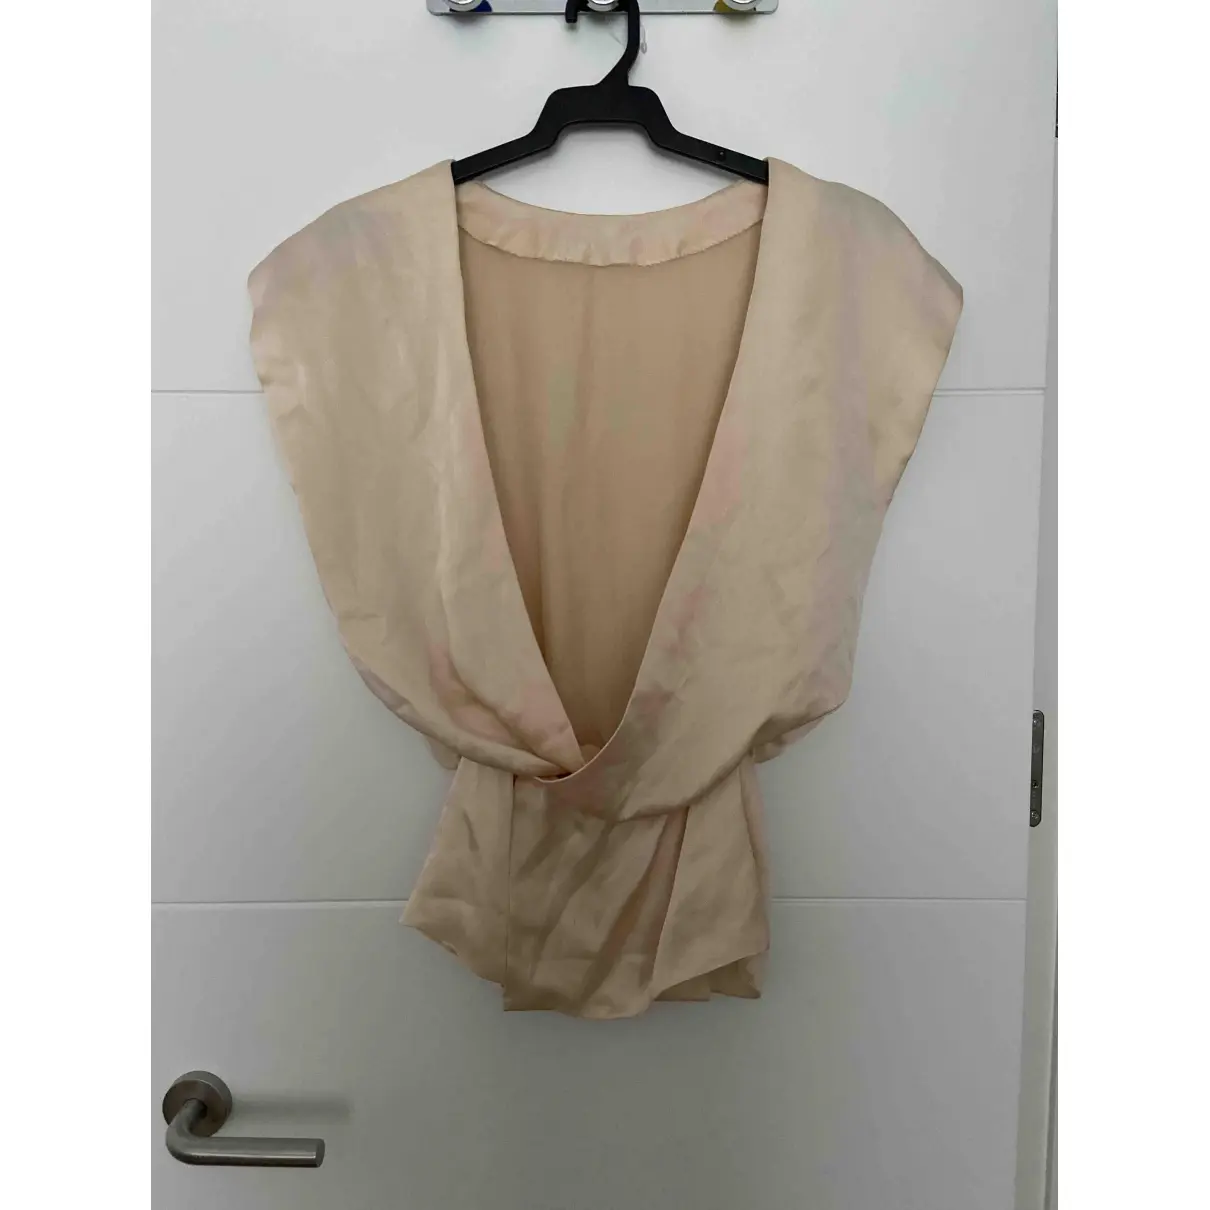 Buy Dior Silk blouse online - Vintage